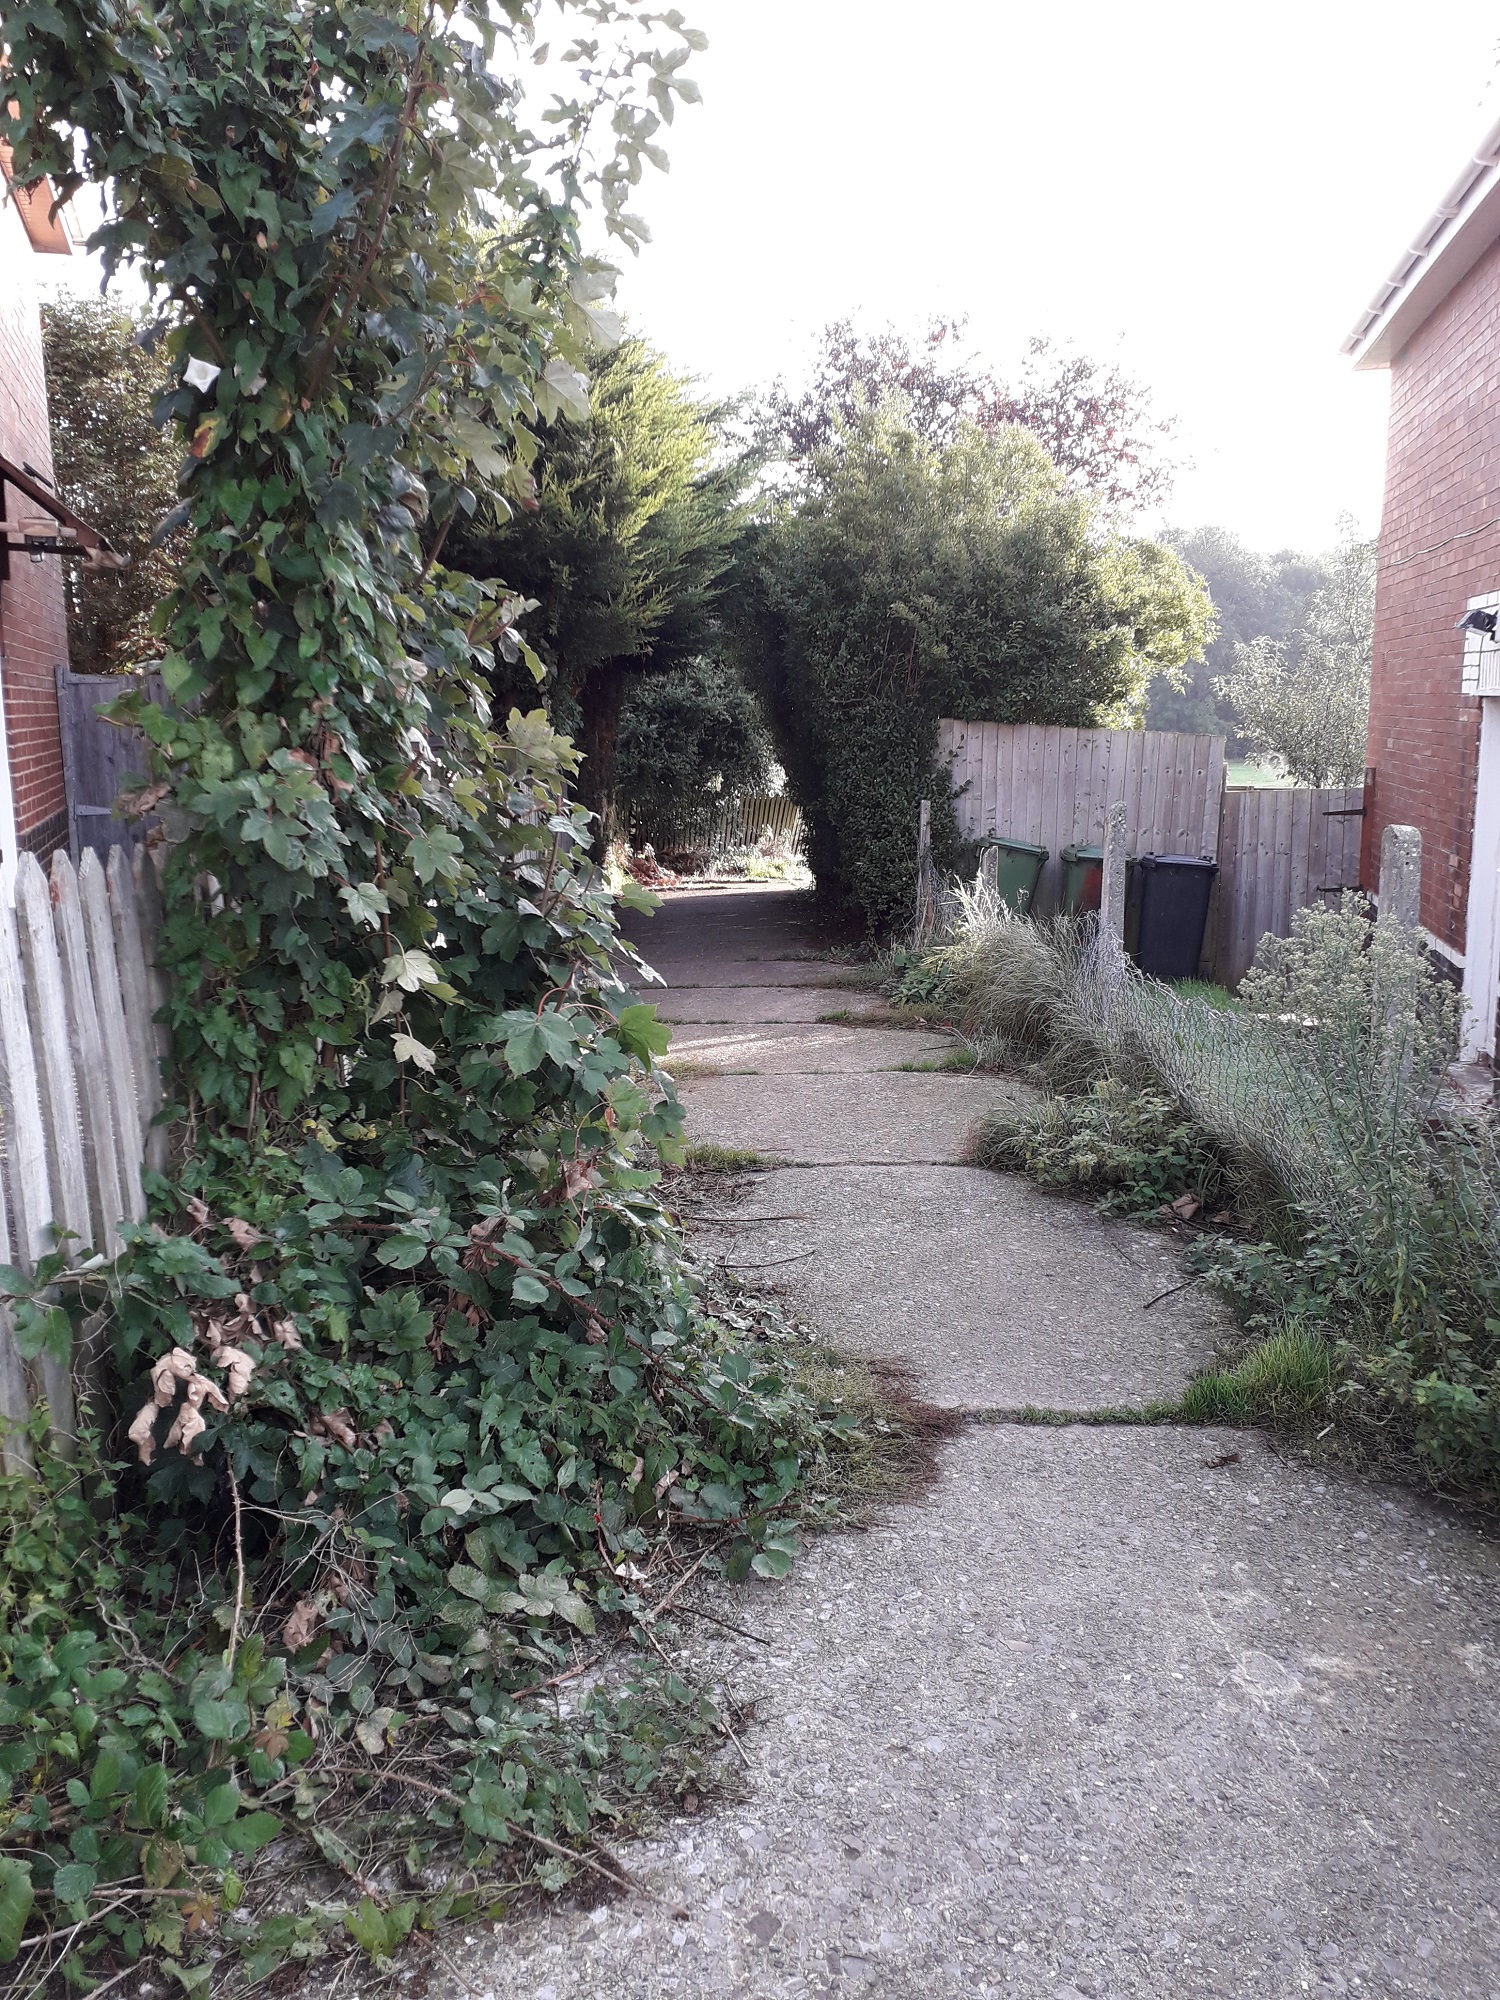 pathway overgrown and dangerous